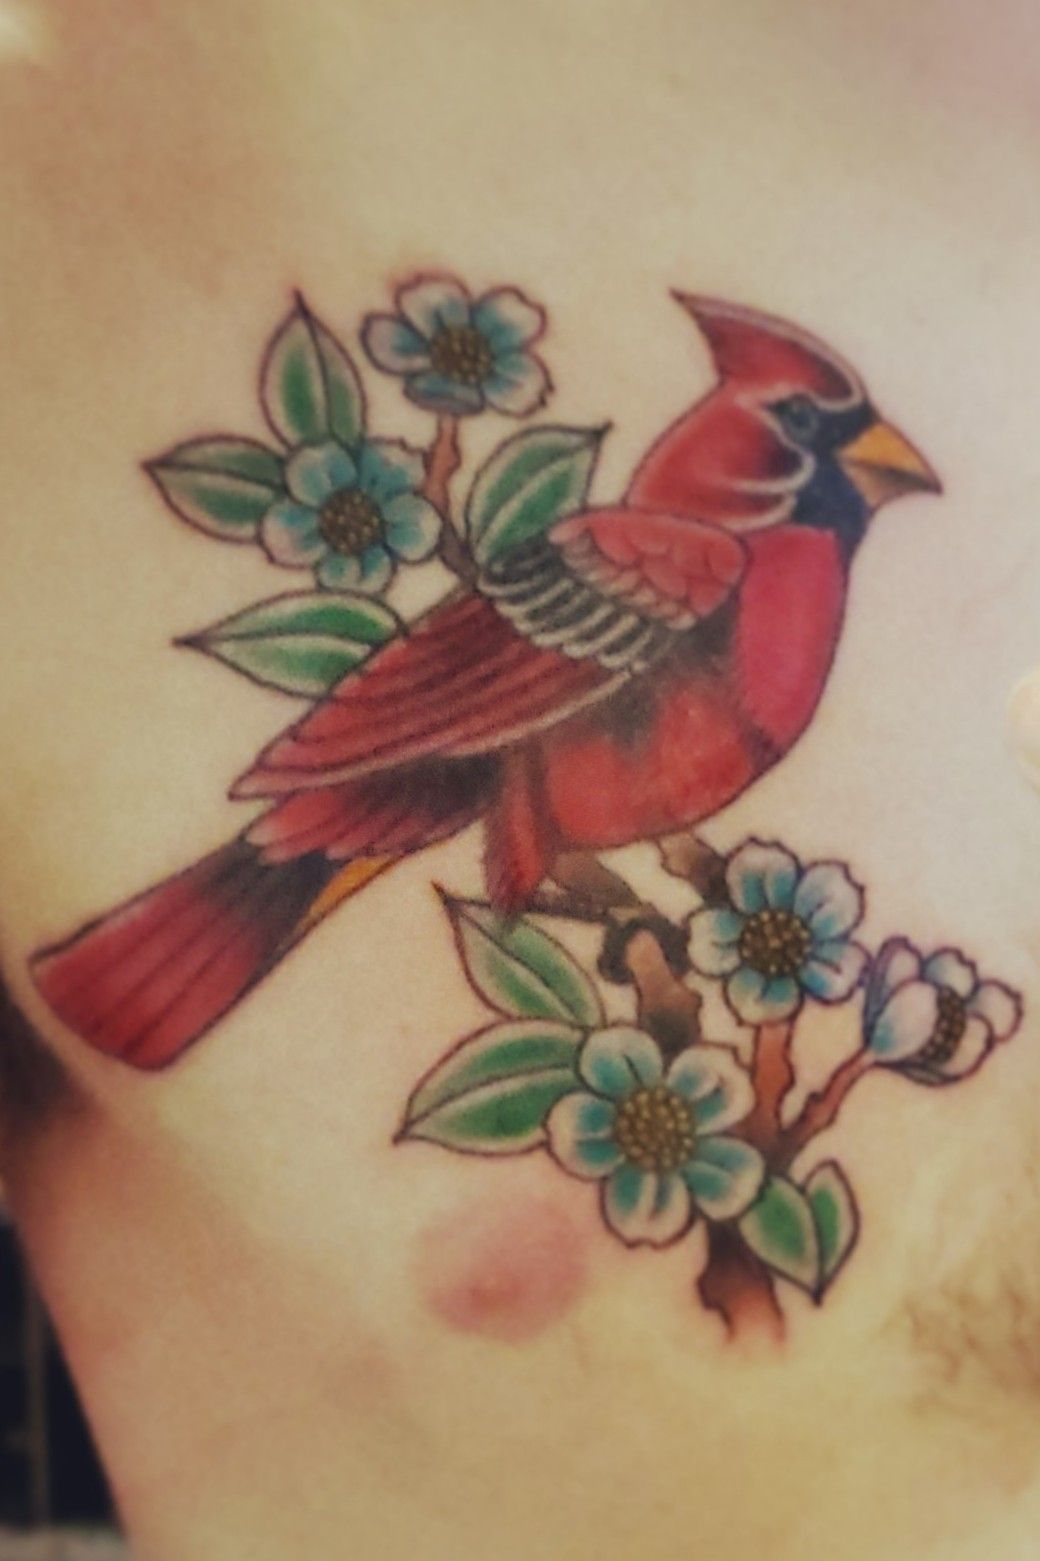 Tattoo tagged with jayshin small cardinal animal tiny bird ifttt  little medium size illustrative upper arm  inkedappcom